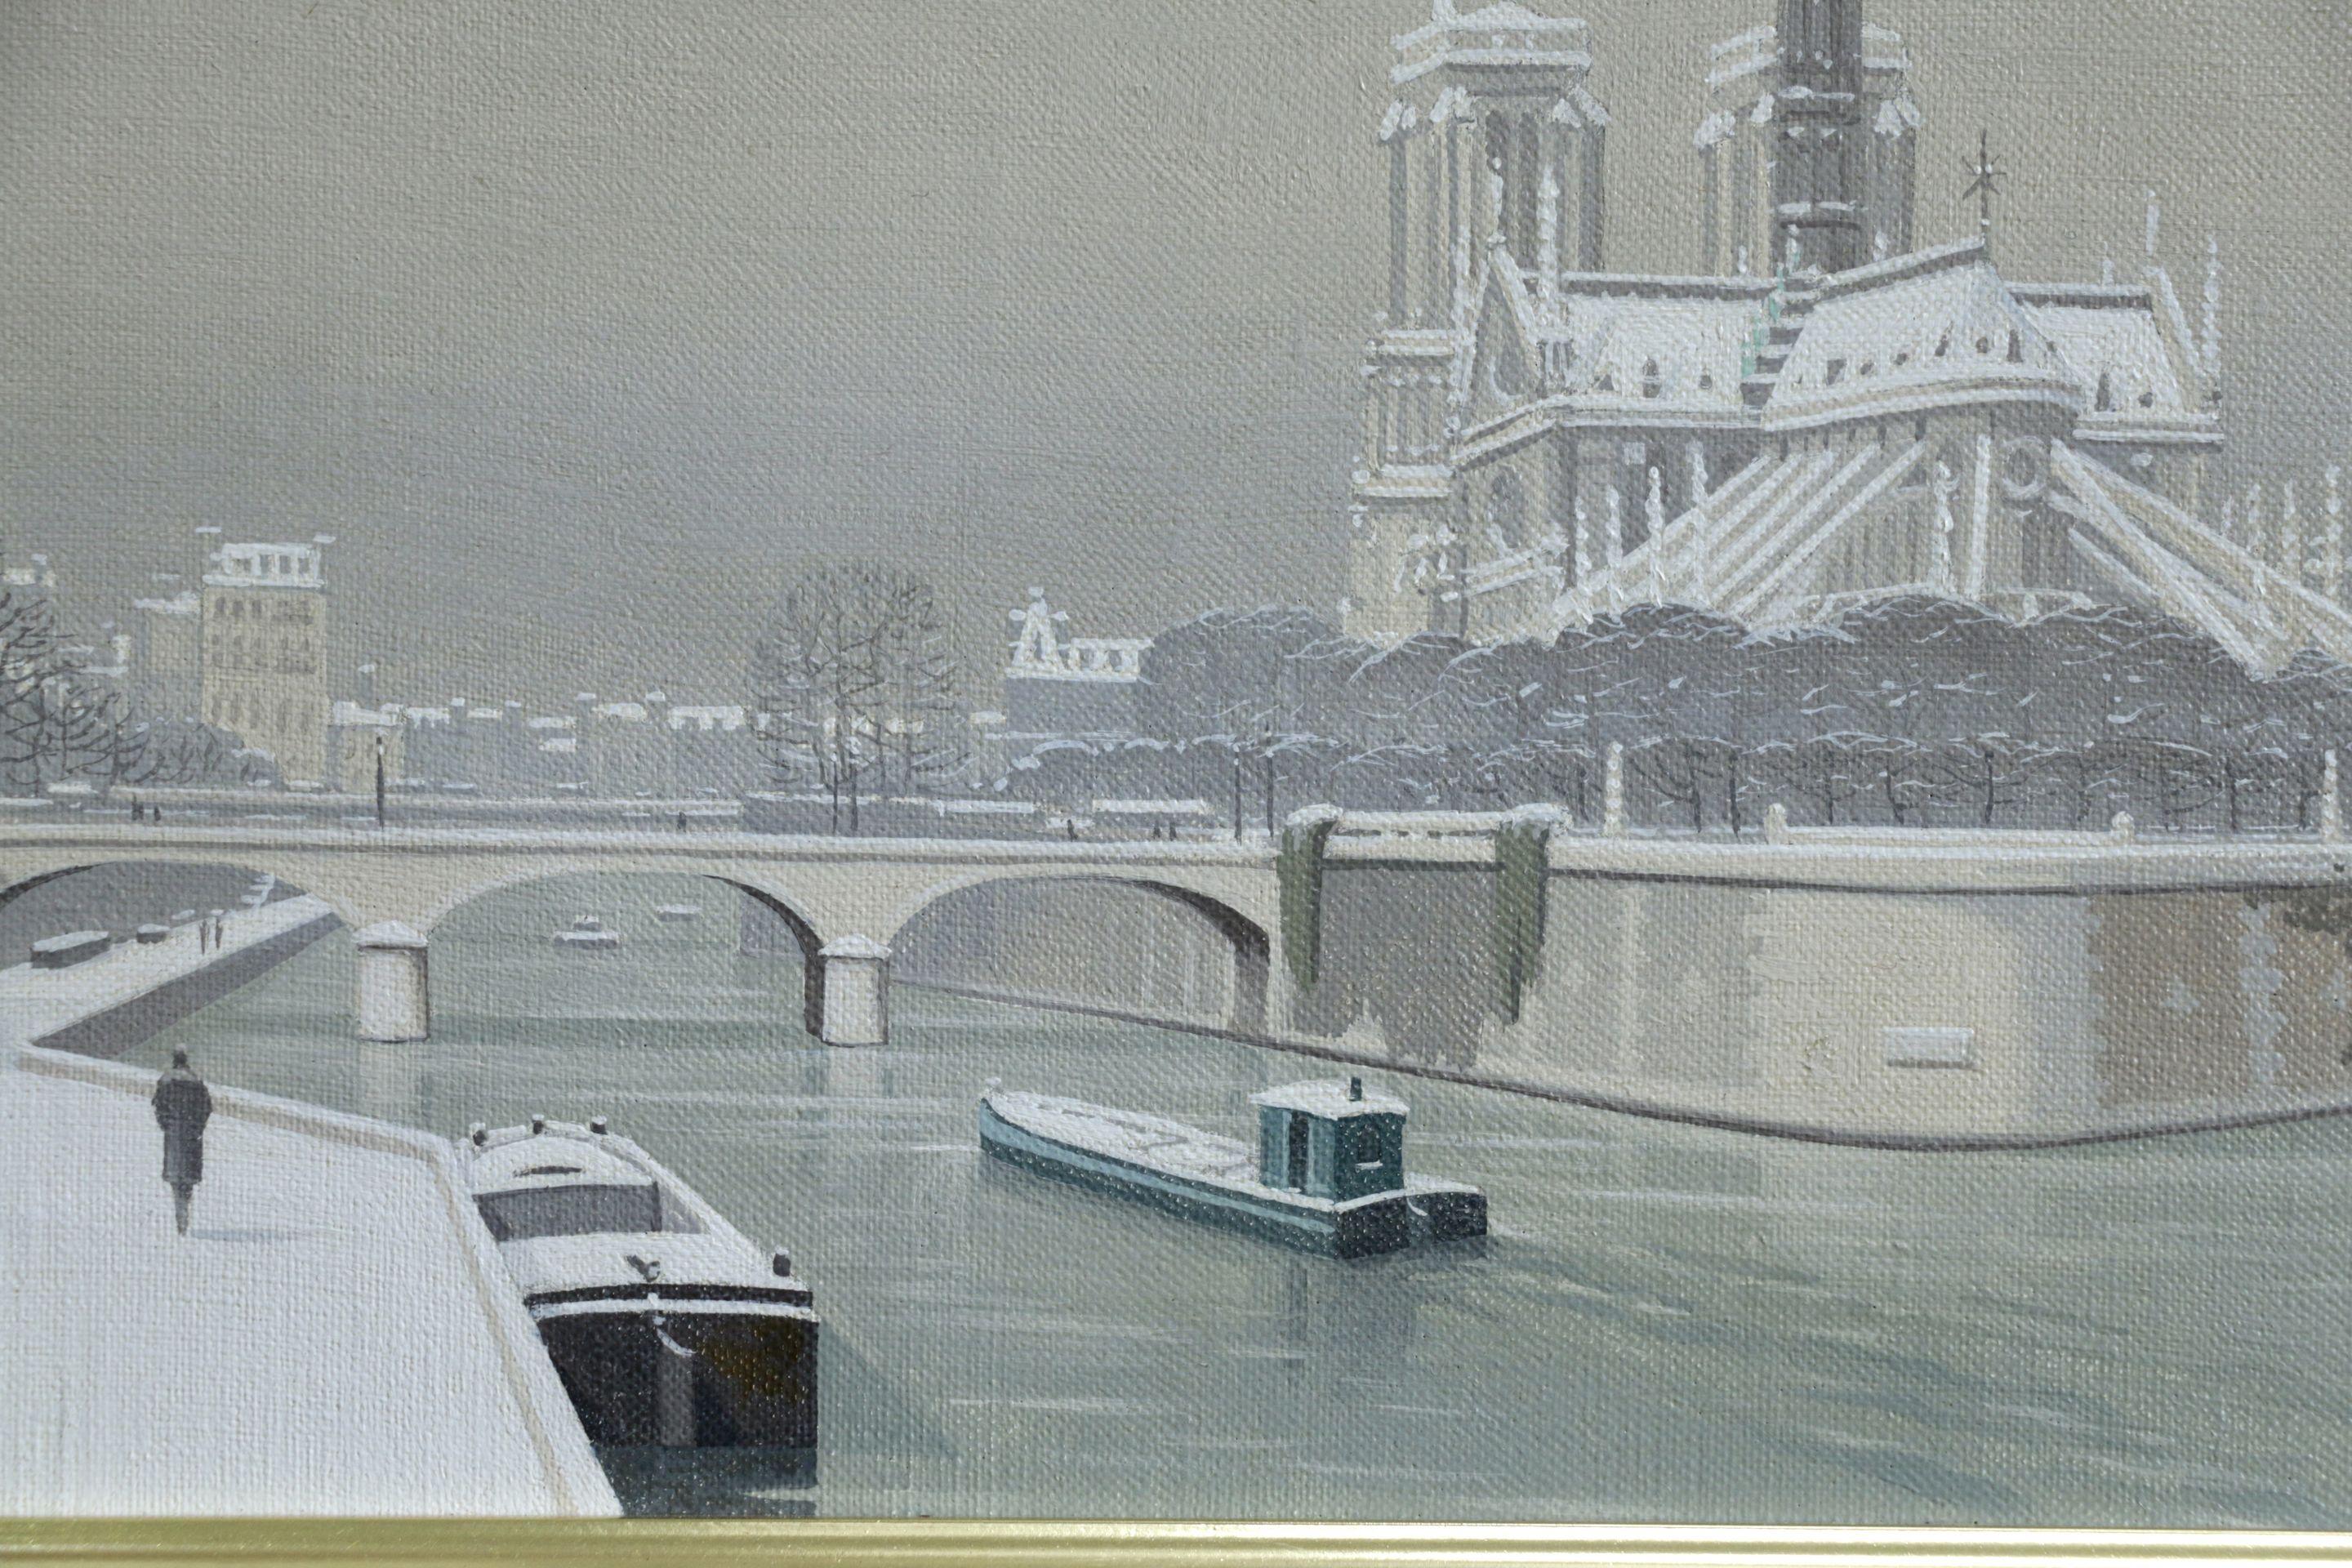 Notre Dame sous la Neige - Boats on River Winter Snow Lanscape by de Clausade - Post-Impressionist Painting by Pierre de Clausade